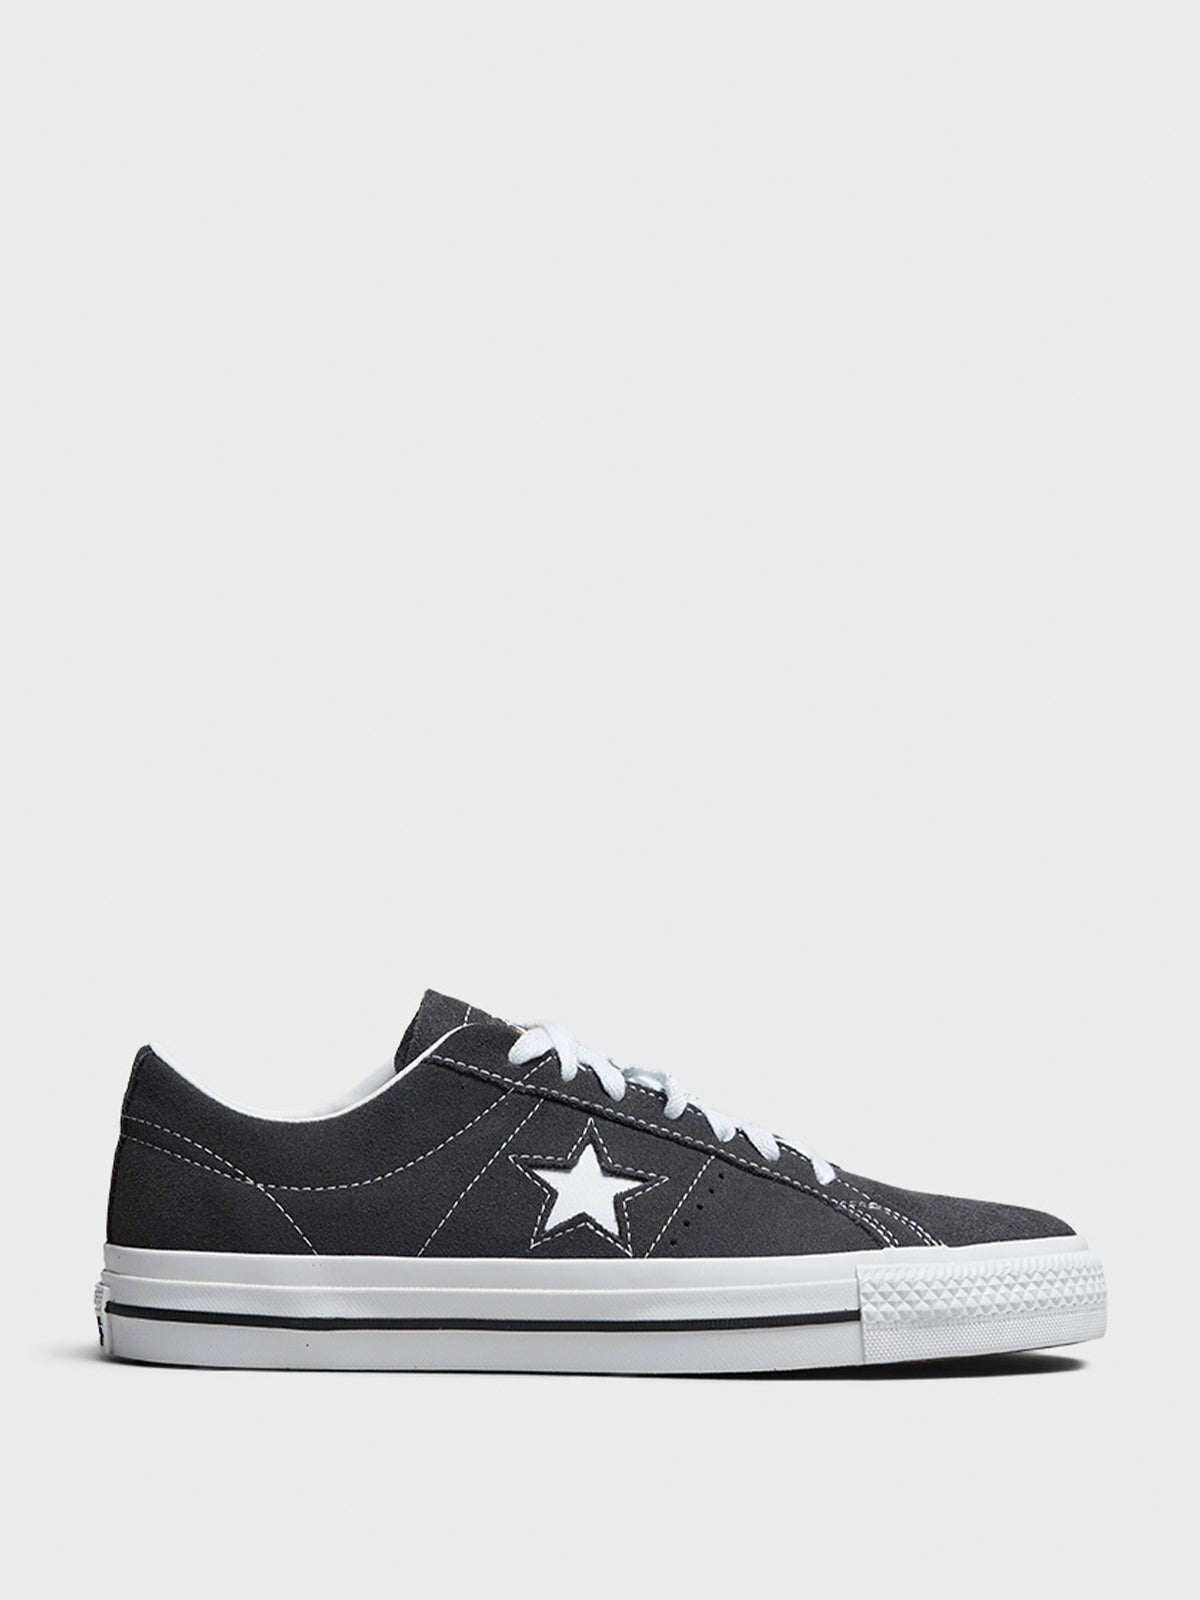 Cons One Star Pro Suede Sneakers in Dark Grey